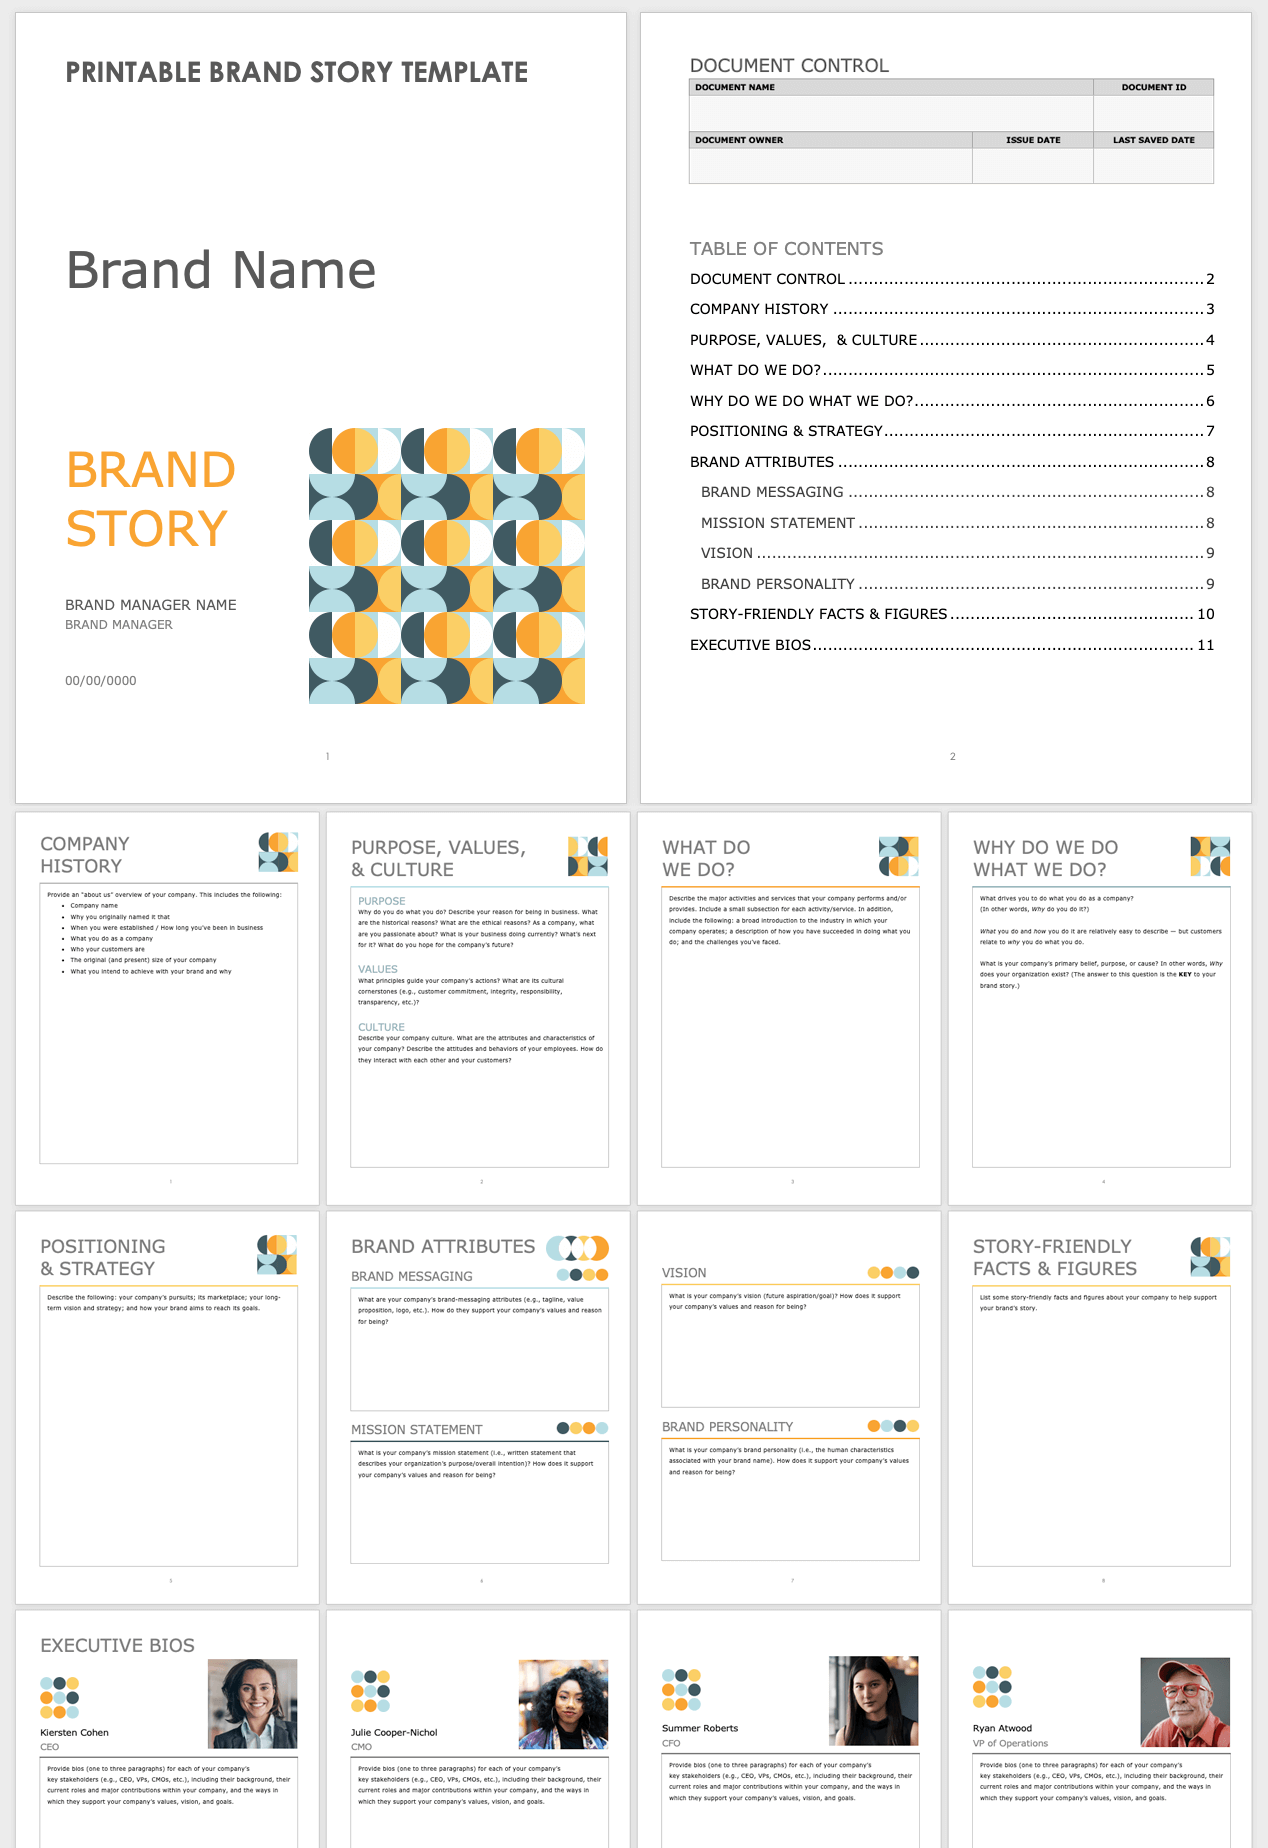 Printable Brand Story Template